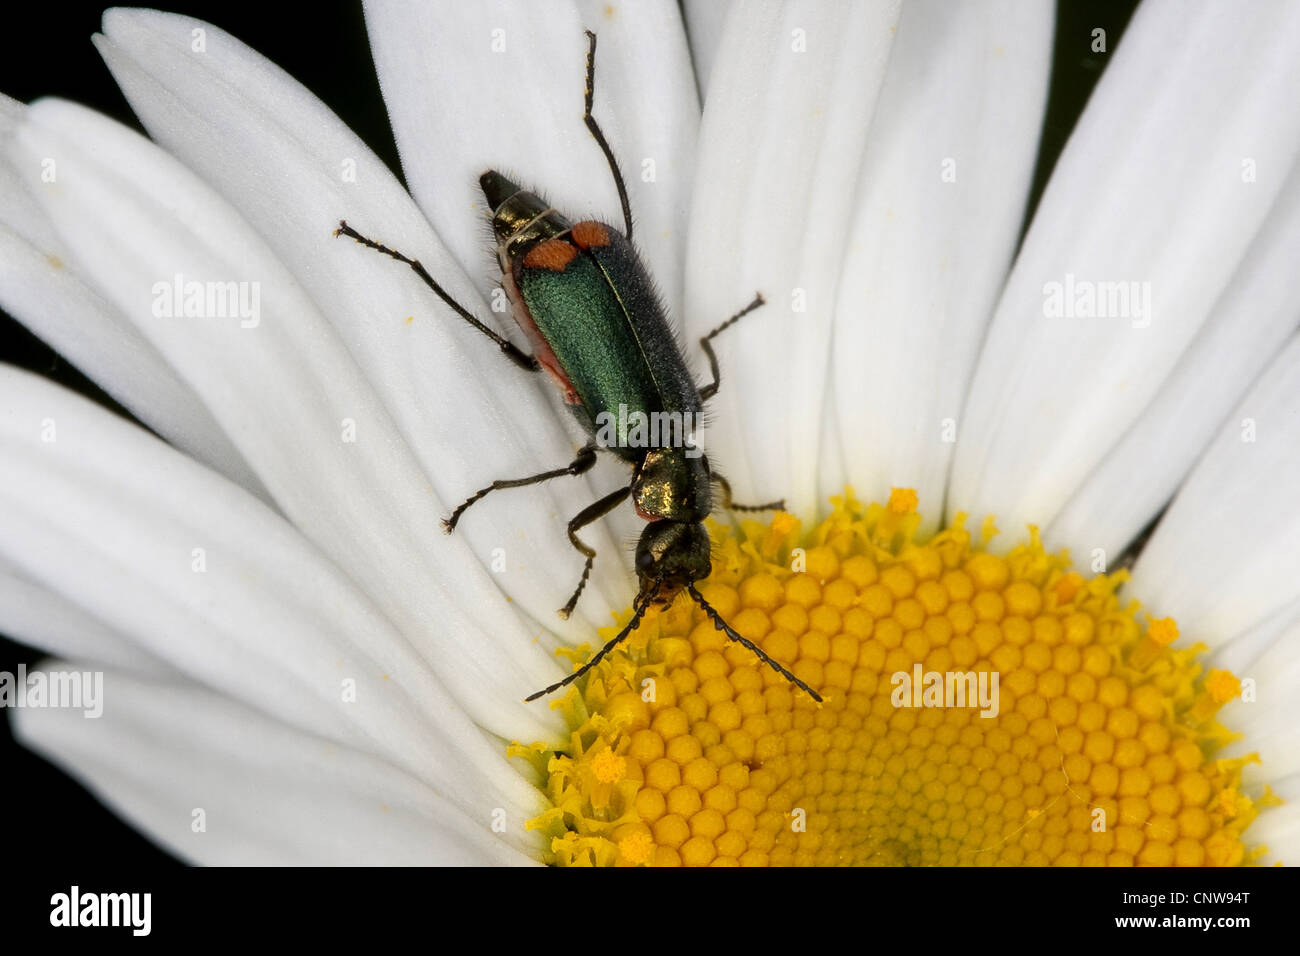 malachiid beetles, flower beetles (Cordylepherus viridis, Malachius viridis), sitting on a daisy, Germany Stock Photo